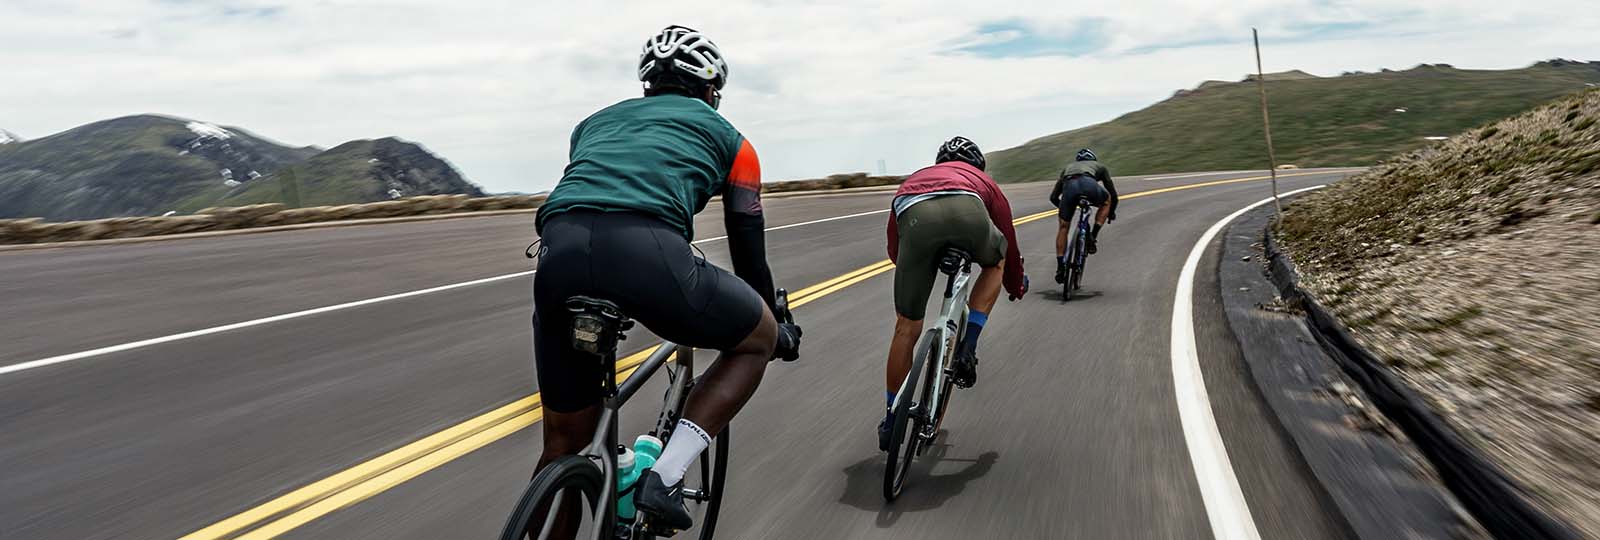 PEARL iZUMi Quest Bib Cycling Shorts - Men's